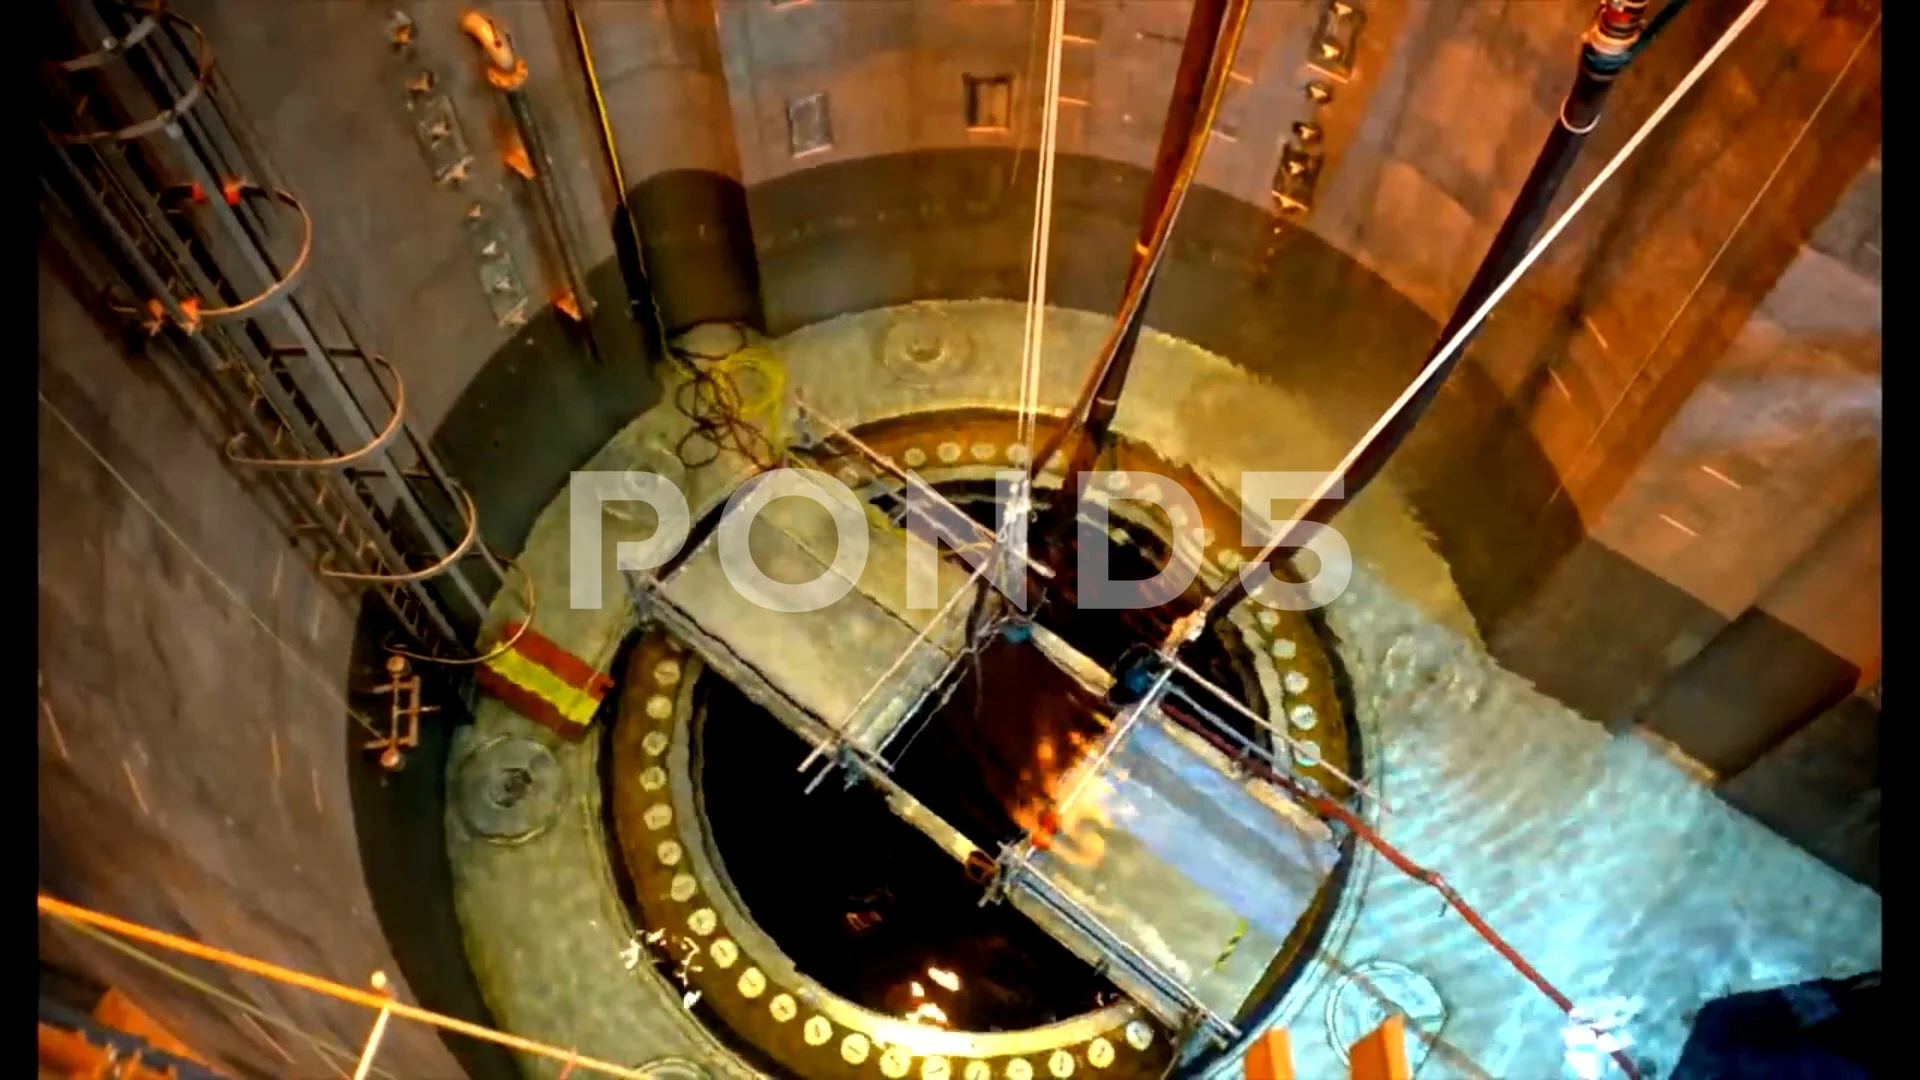 nuclear power plant reactor core